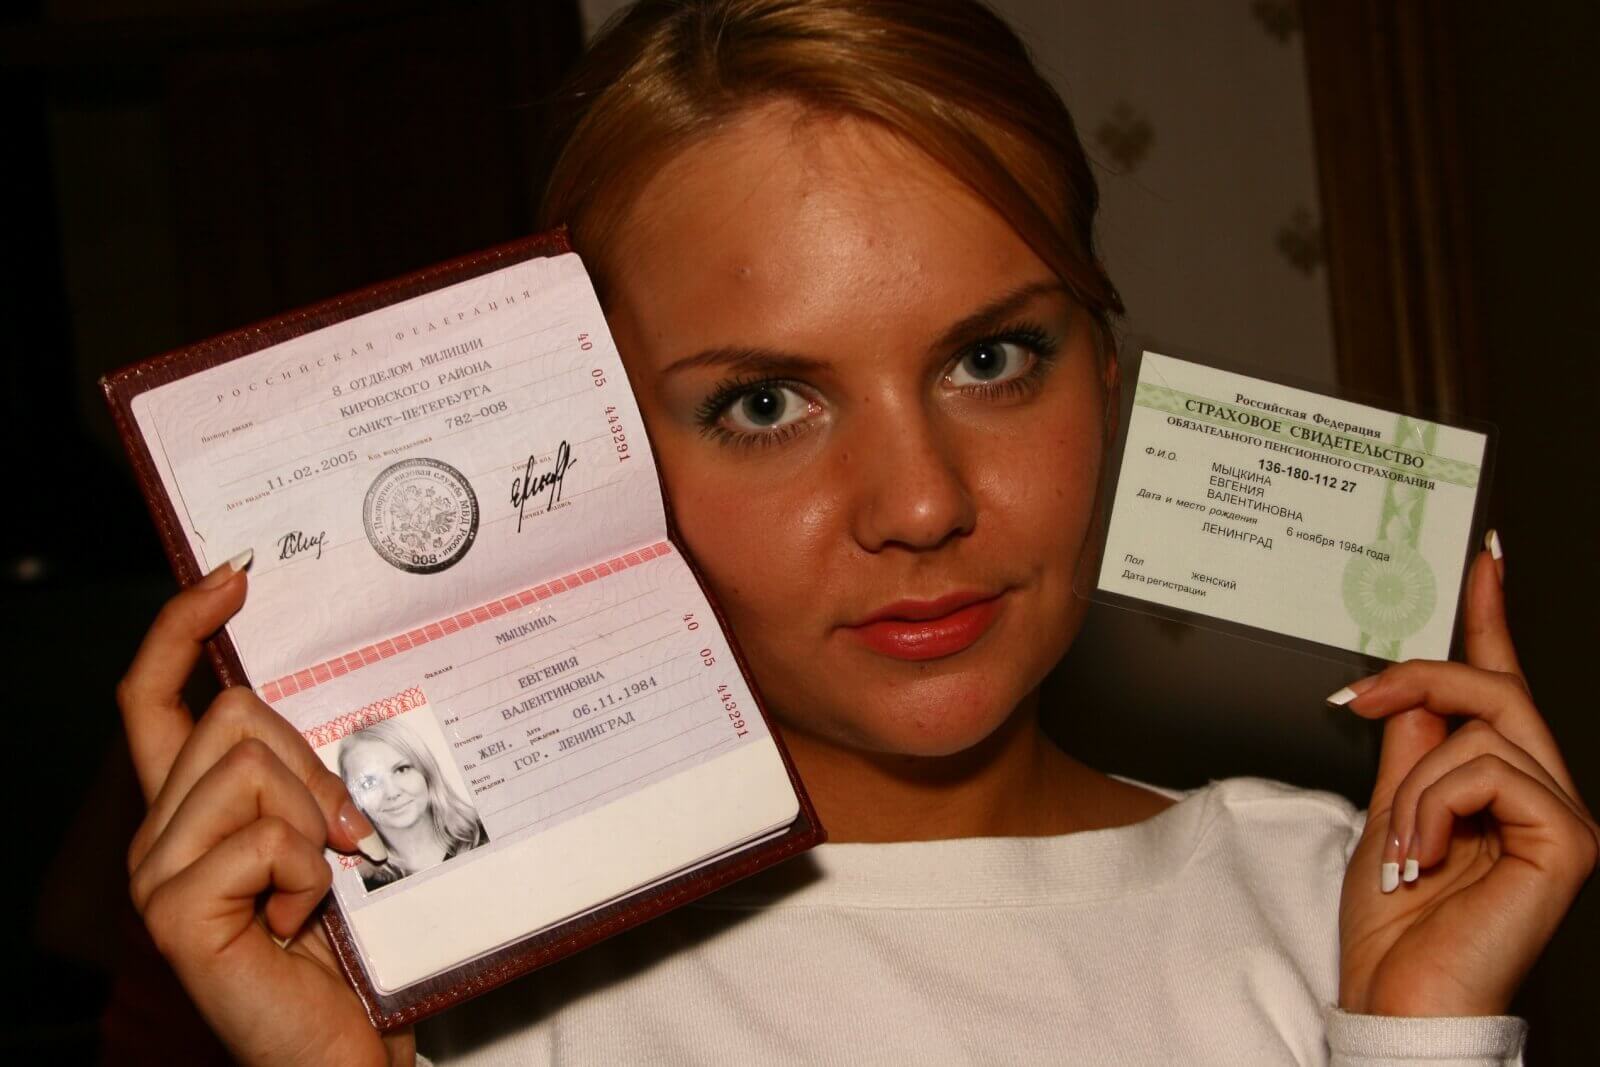 Фото паспорта с пропиской и снилс